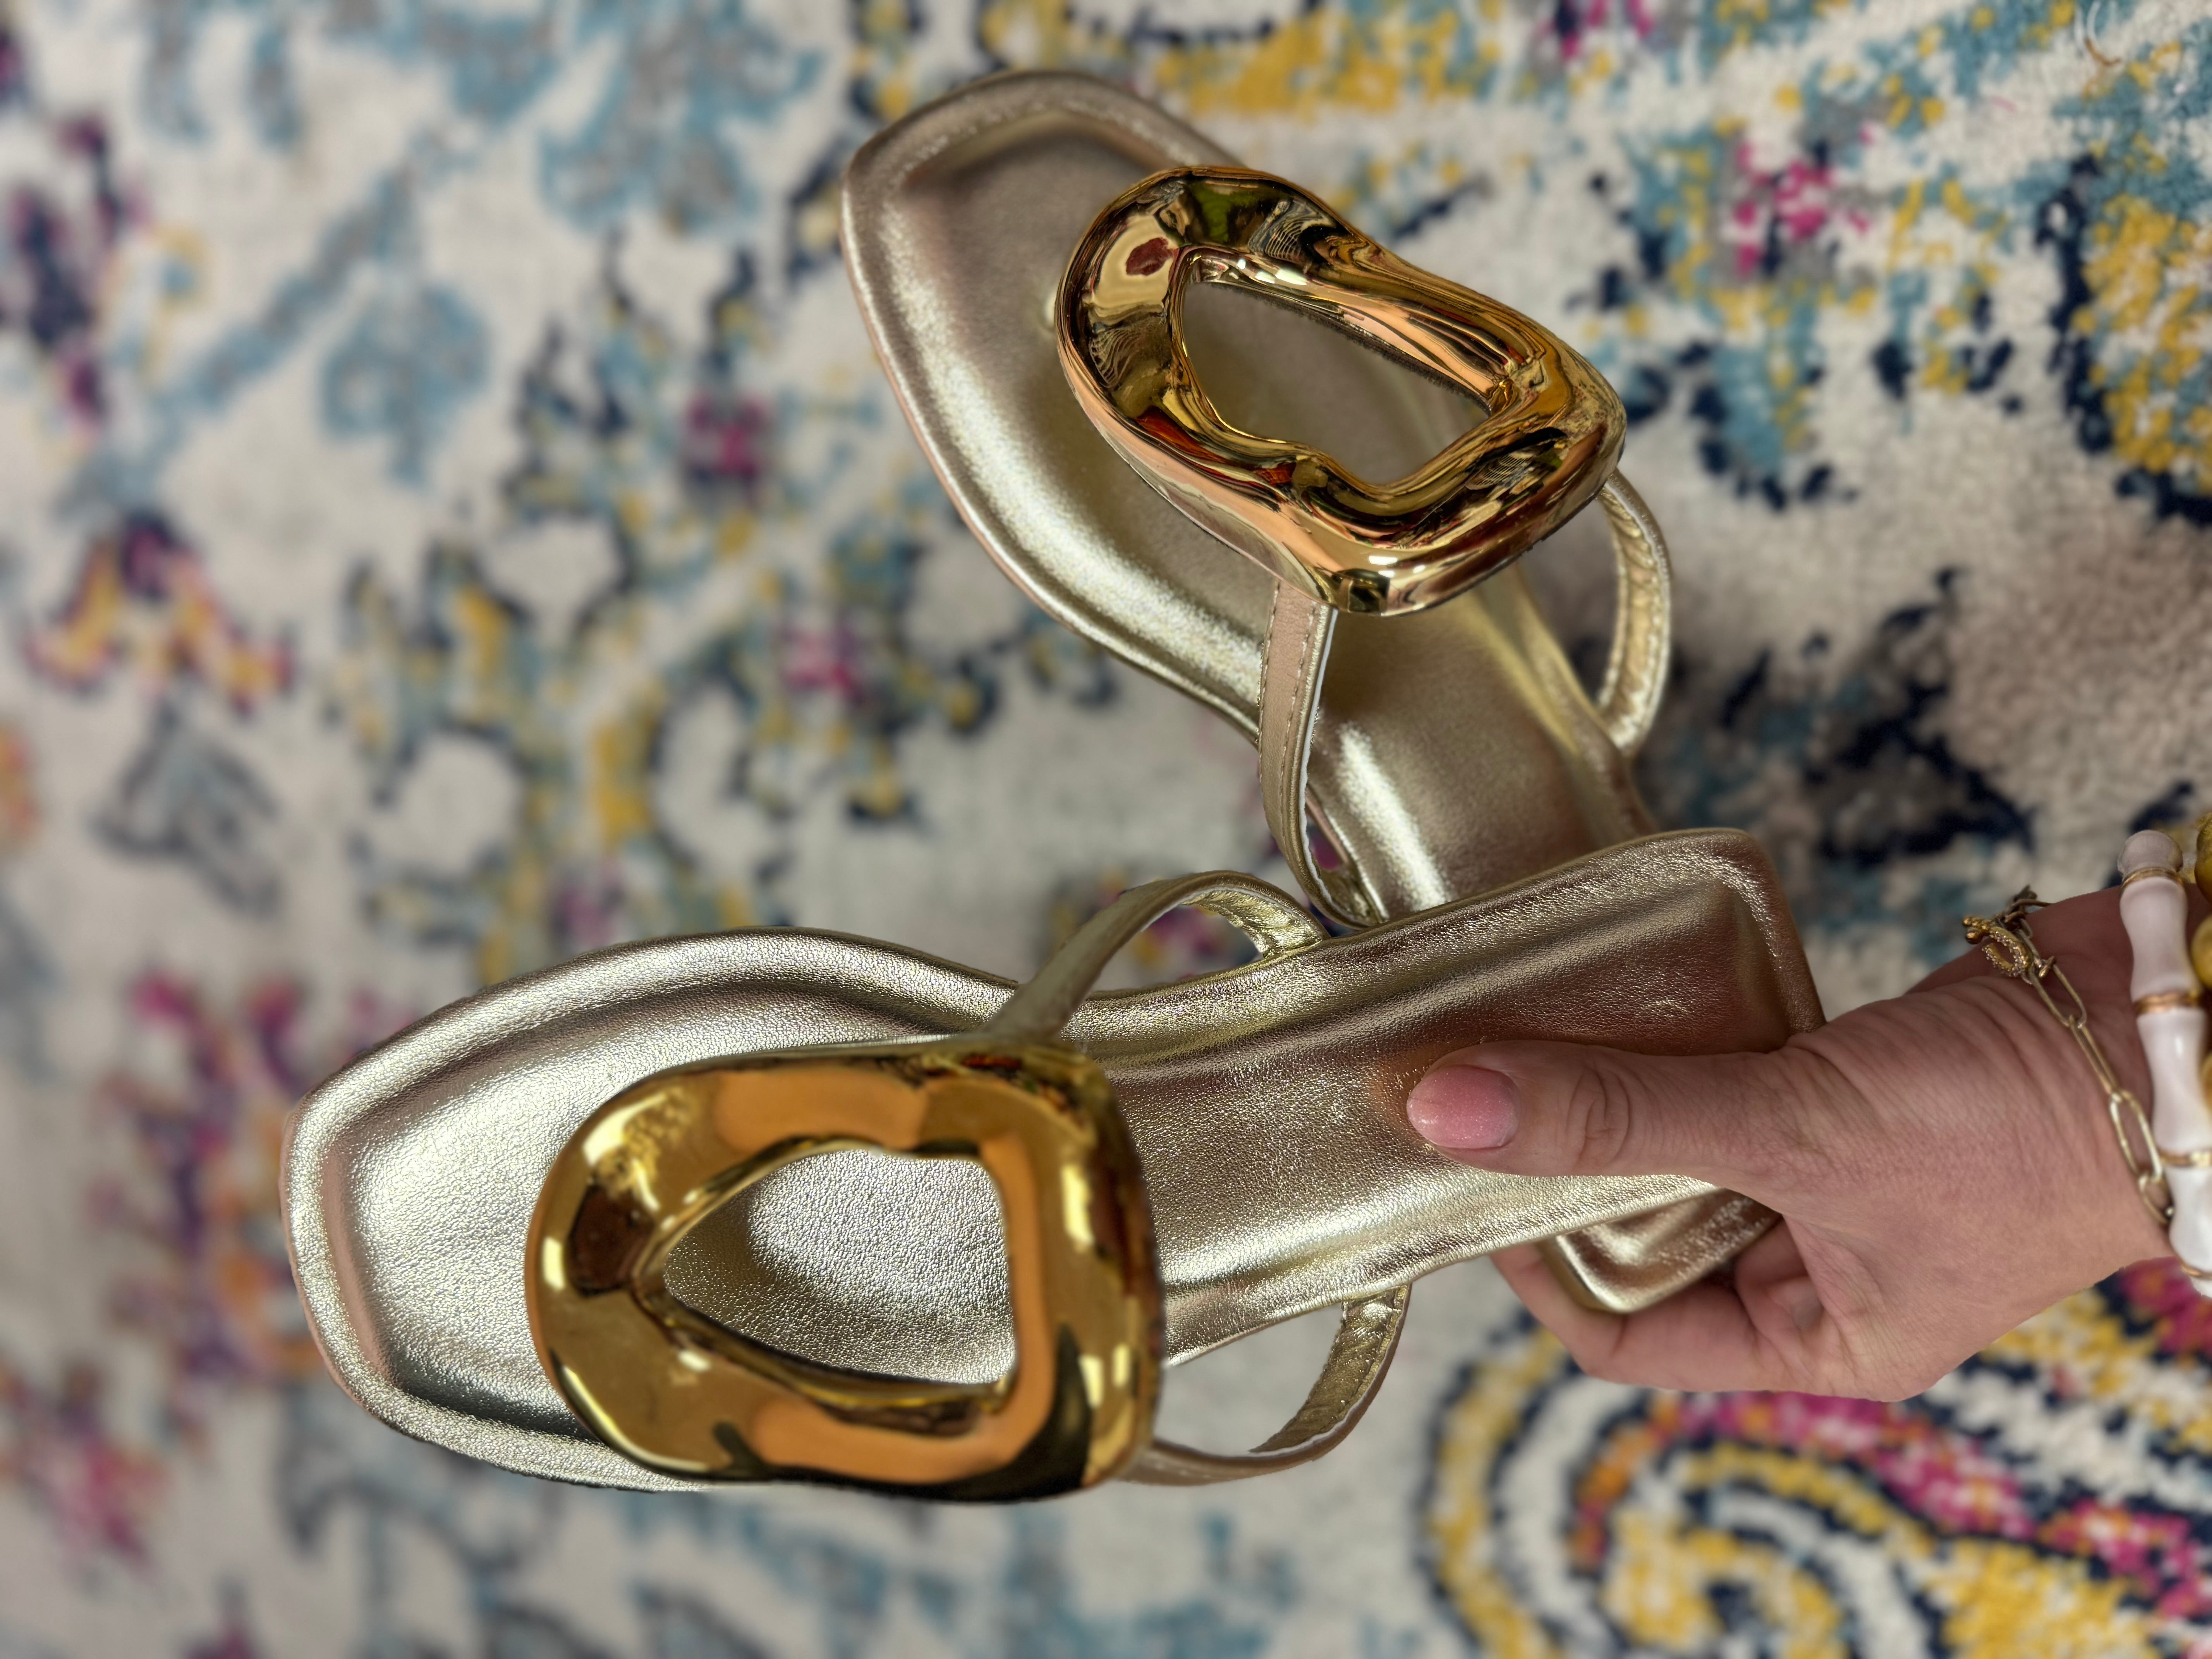 Gold Metal Pendant Flat Sandals